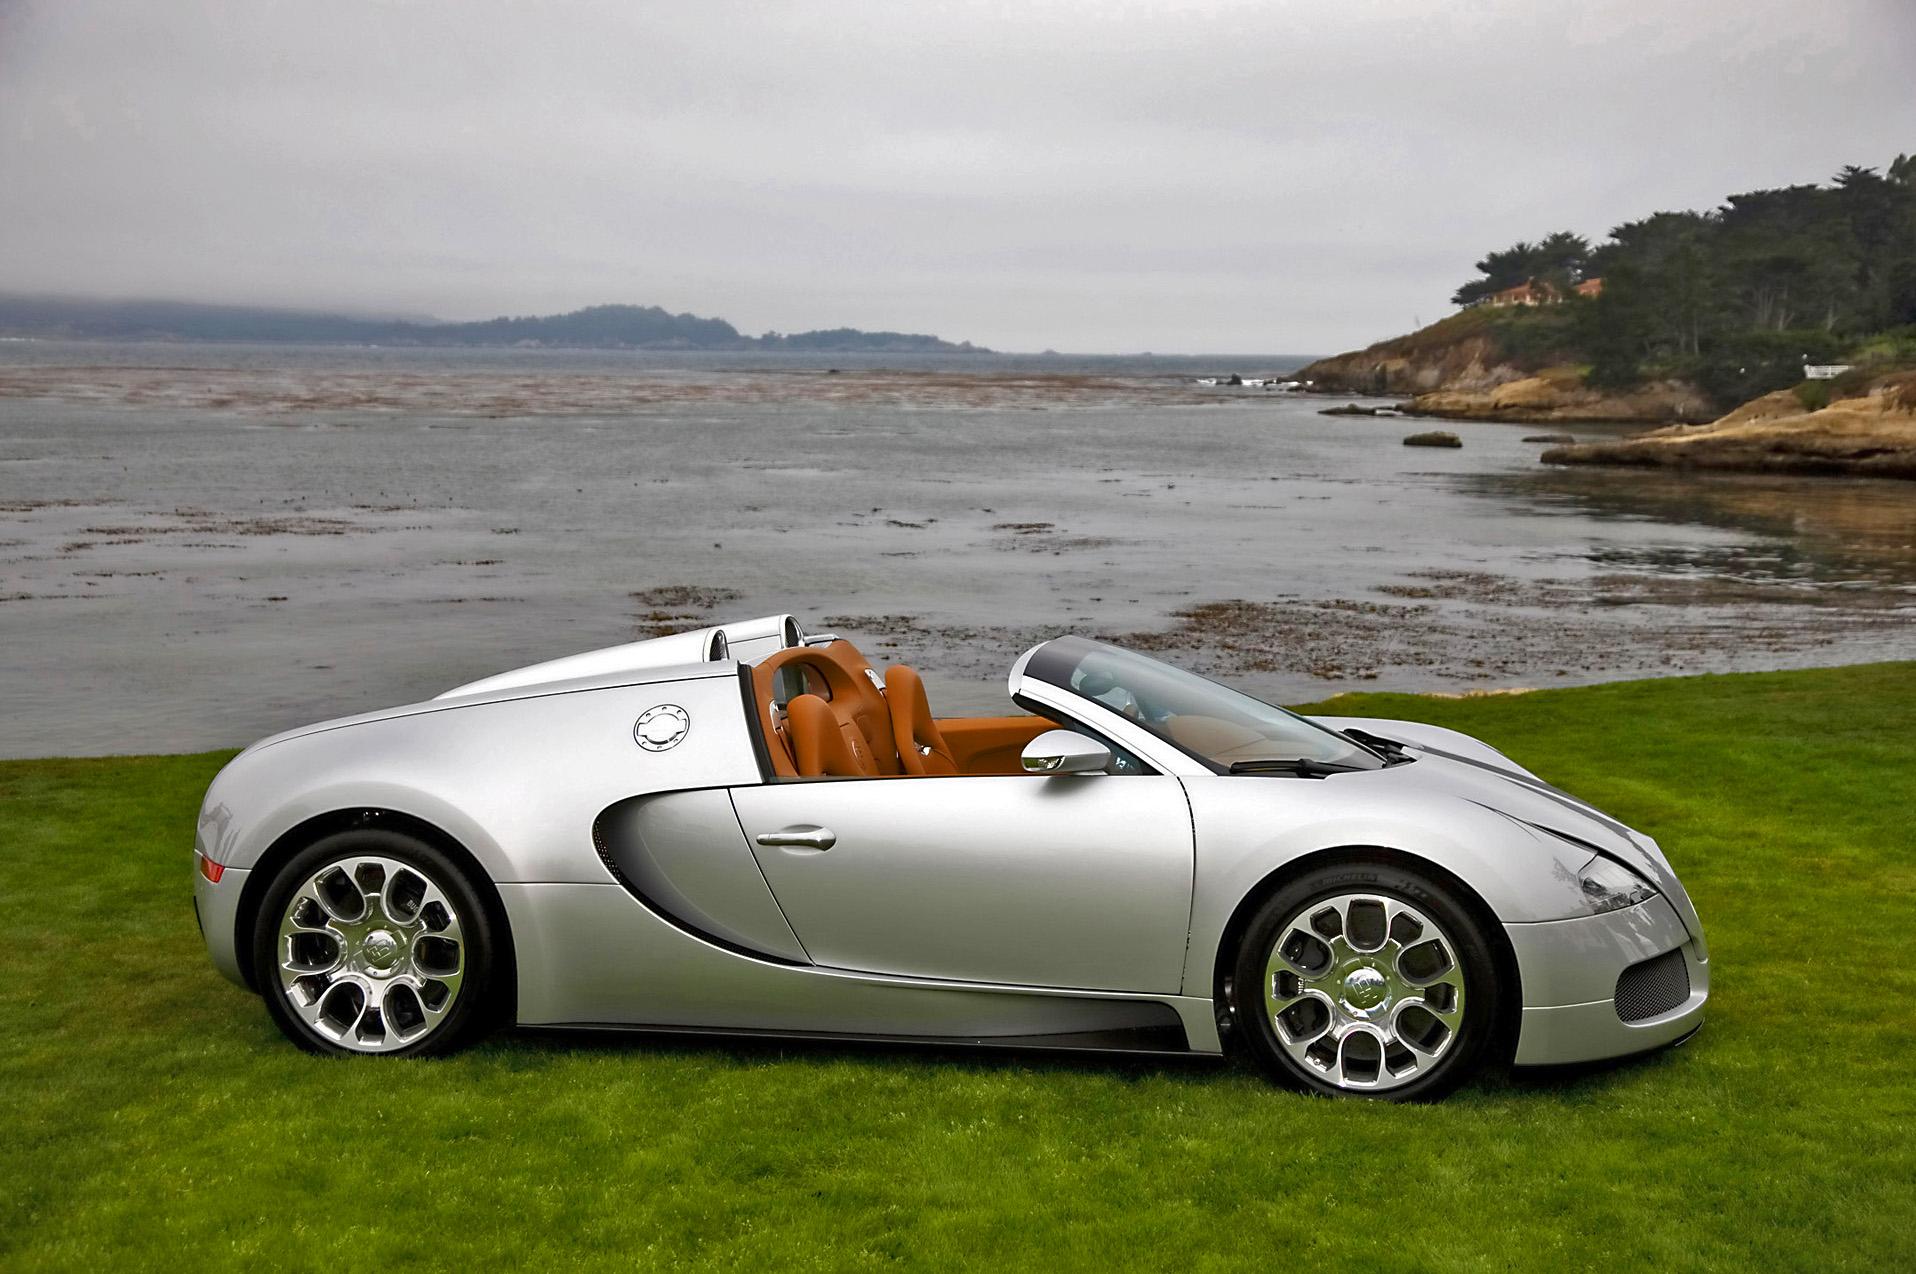 Veyron Grandsport still remaining the most jaw-dropping Bugatti 2009 model